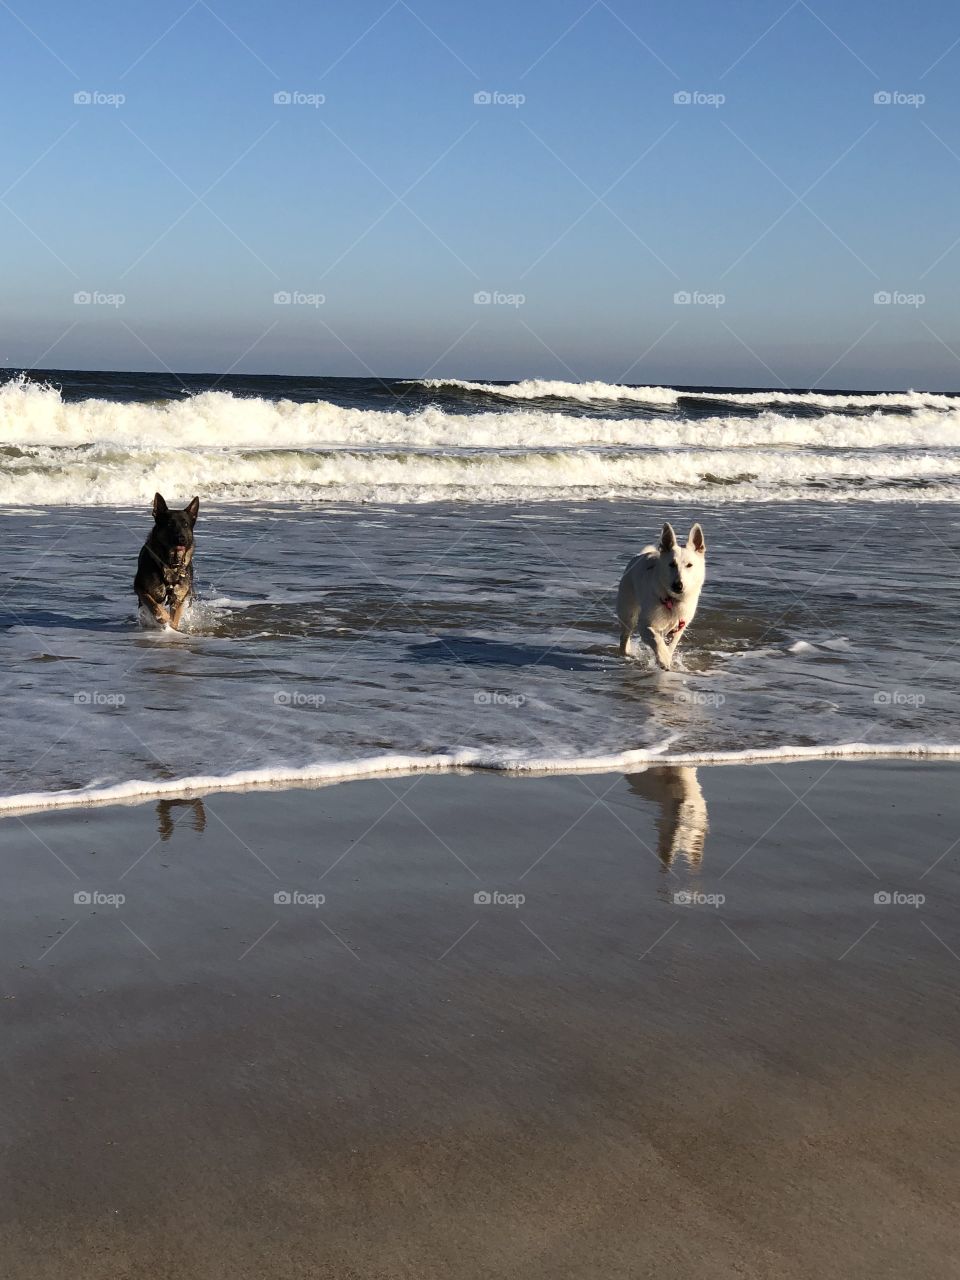 Pups at the beach